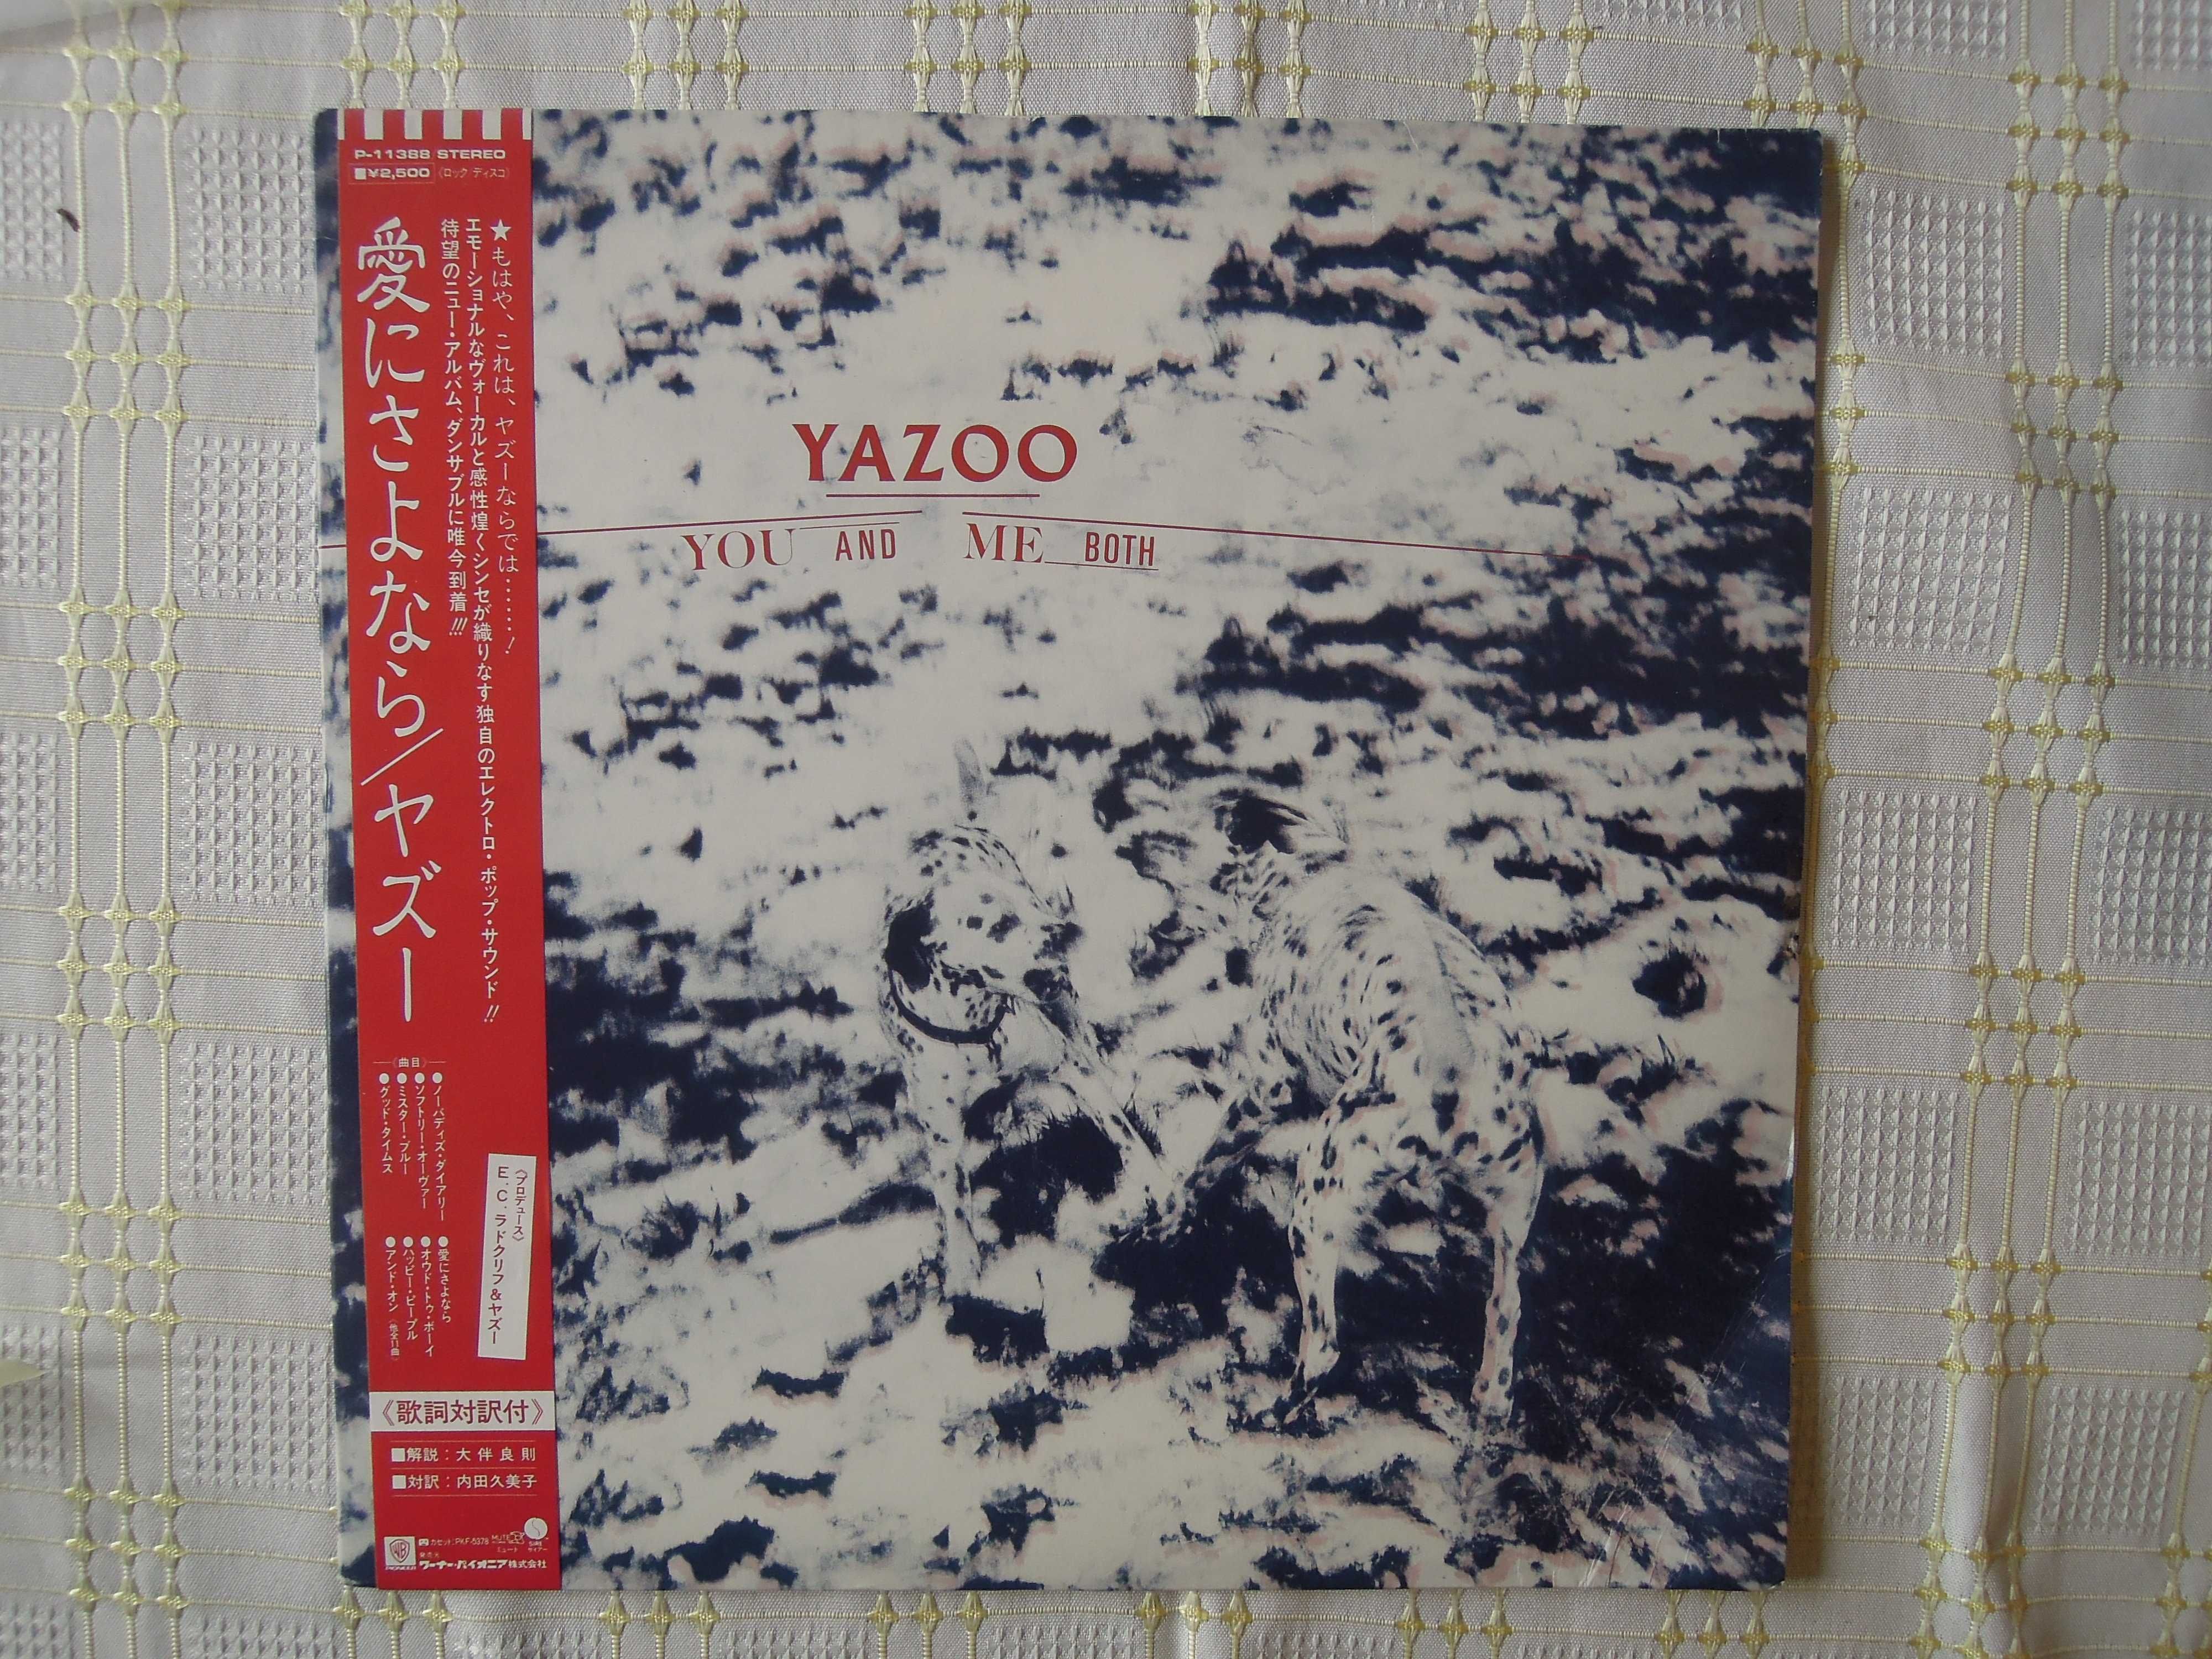 yazoo-you and me both-płyta winylowa japan